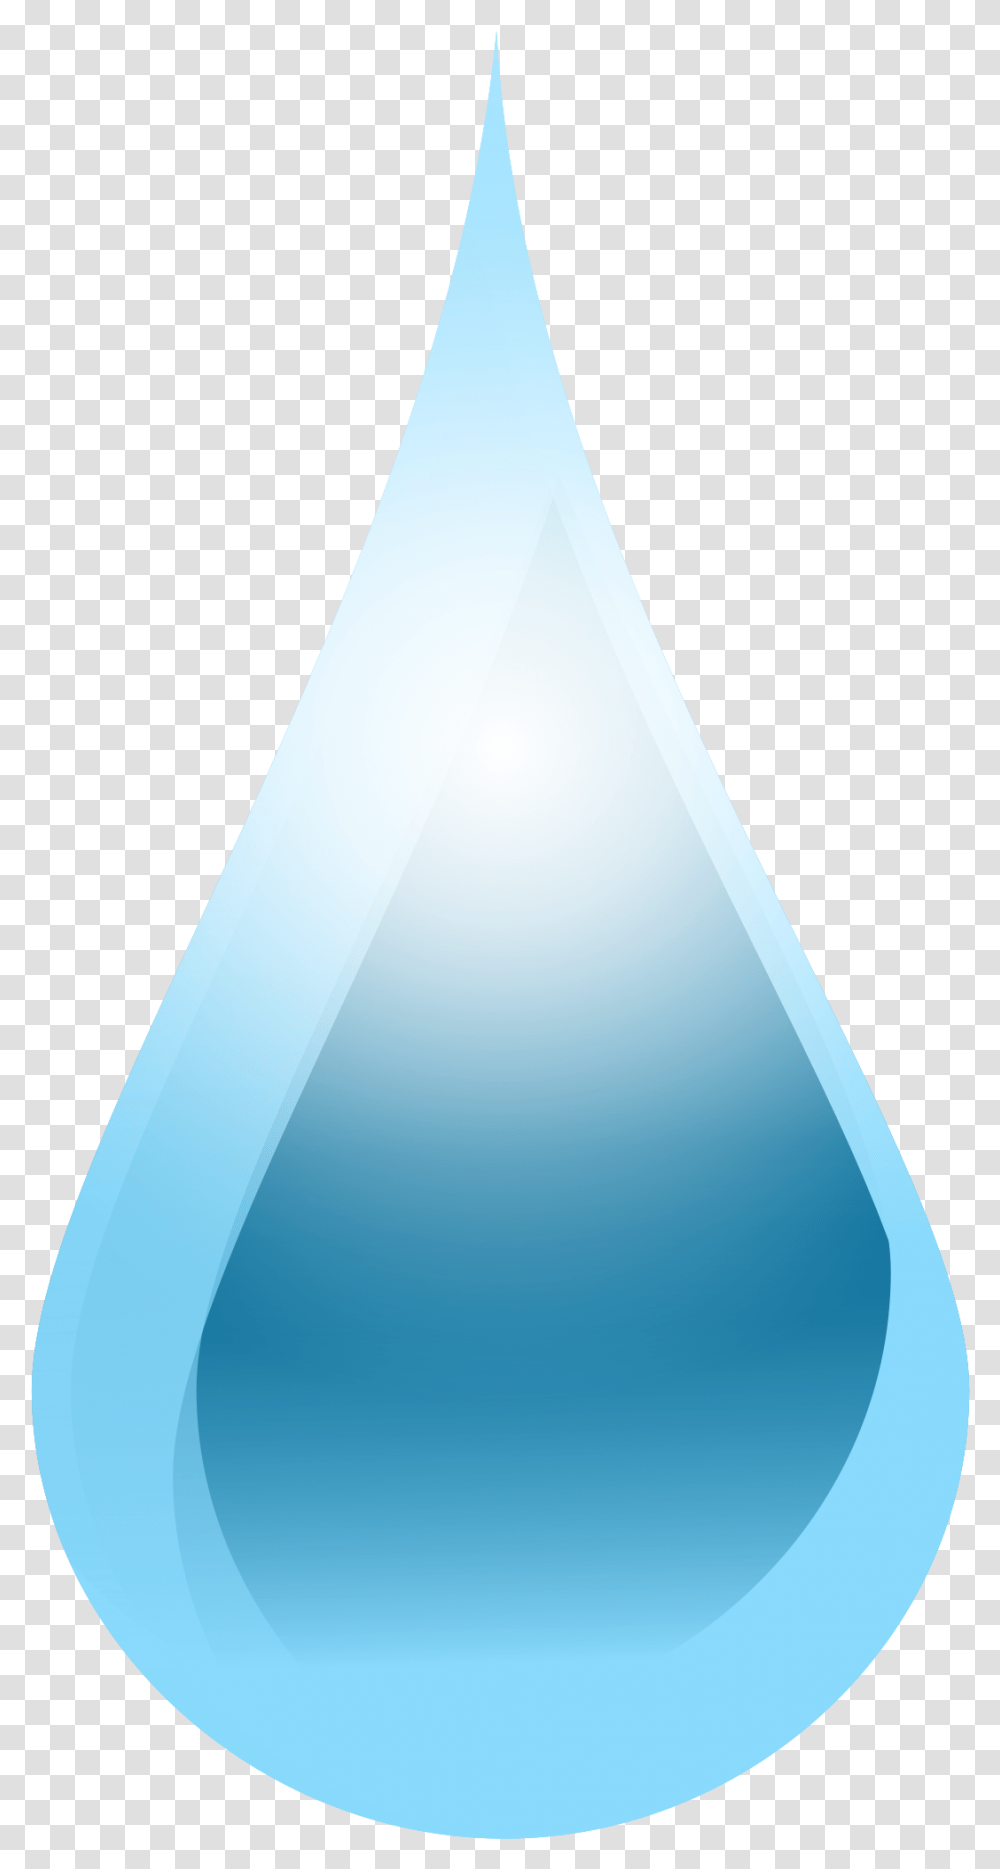 Download Svg Stock Drop Big Image Water Drop Image Gotas De Agua Dibujo, Droplet, Triangle, Plant, Cone Transparent Png